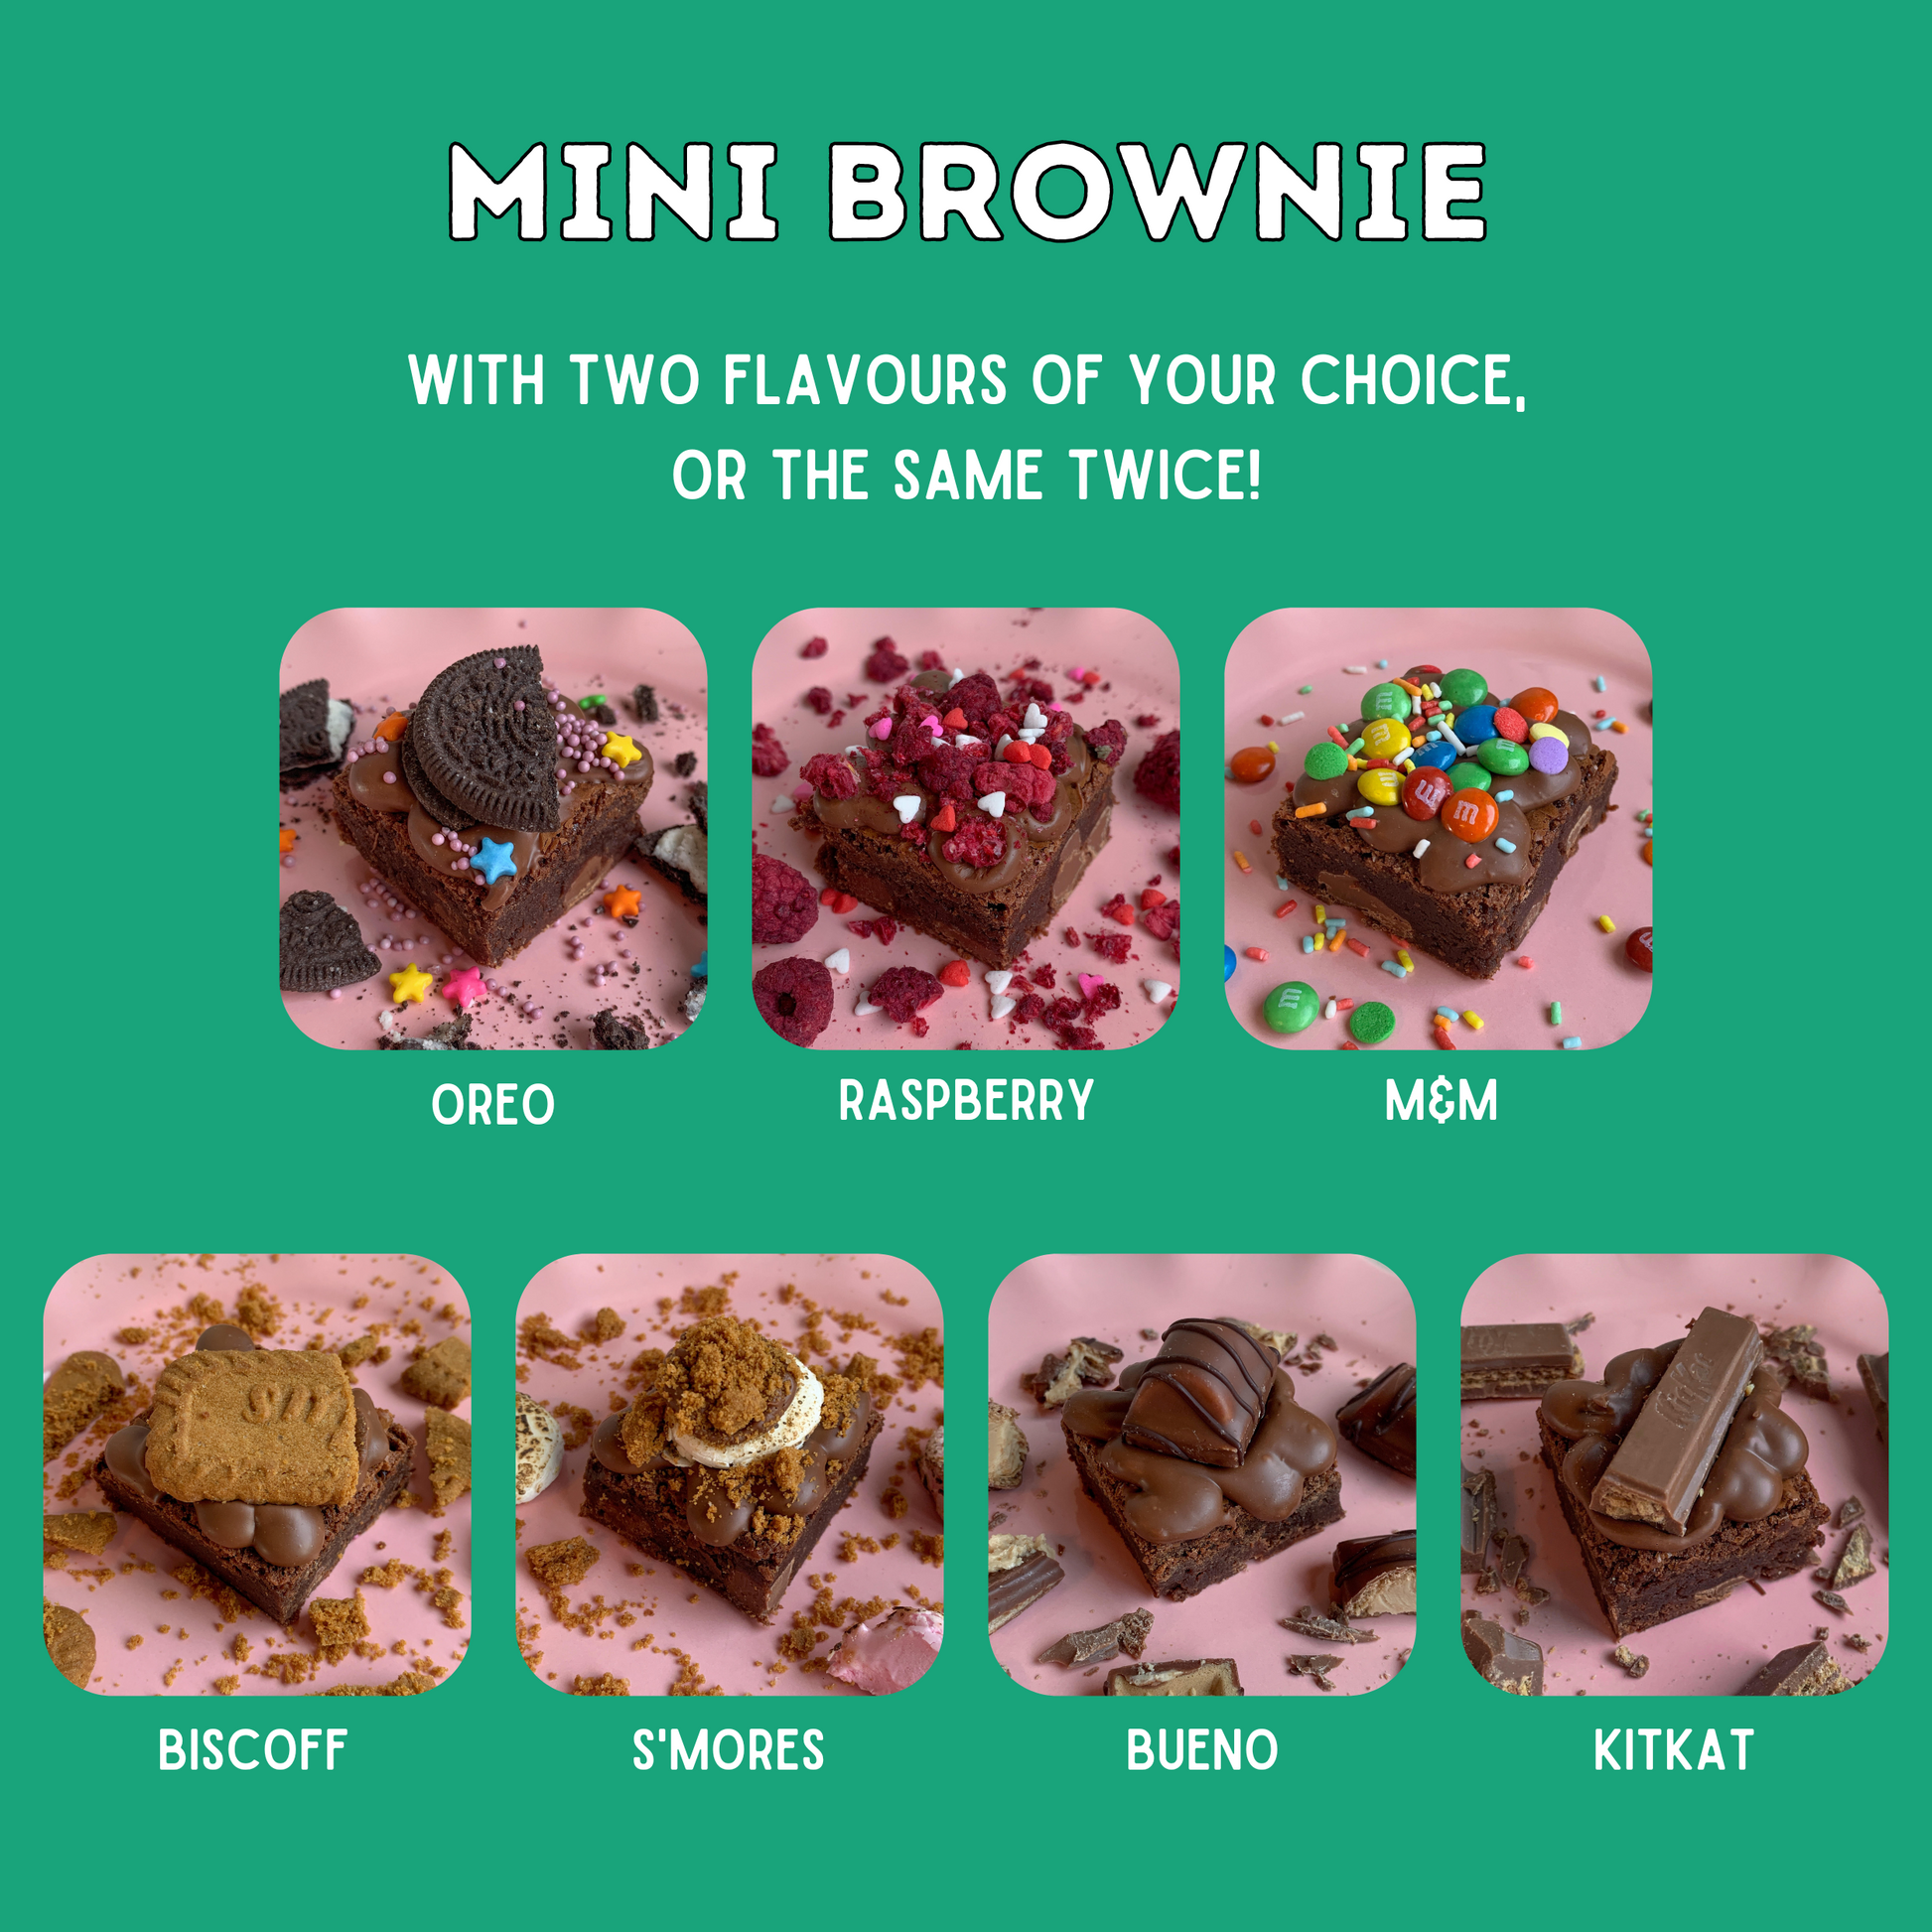 Mini brownie flavours - oreo, raspberry, M&M, biscoff, s'mores, bueno, kitkat